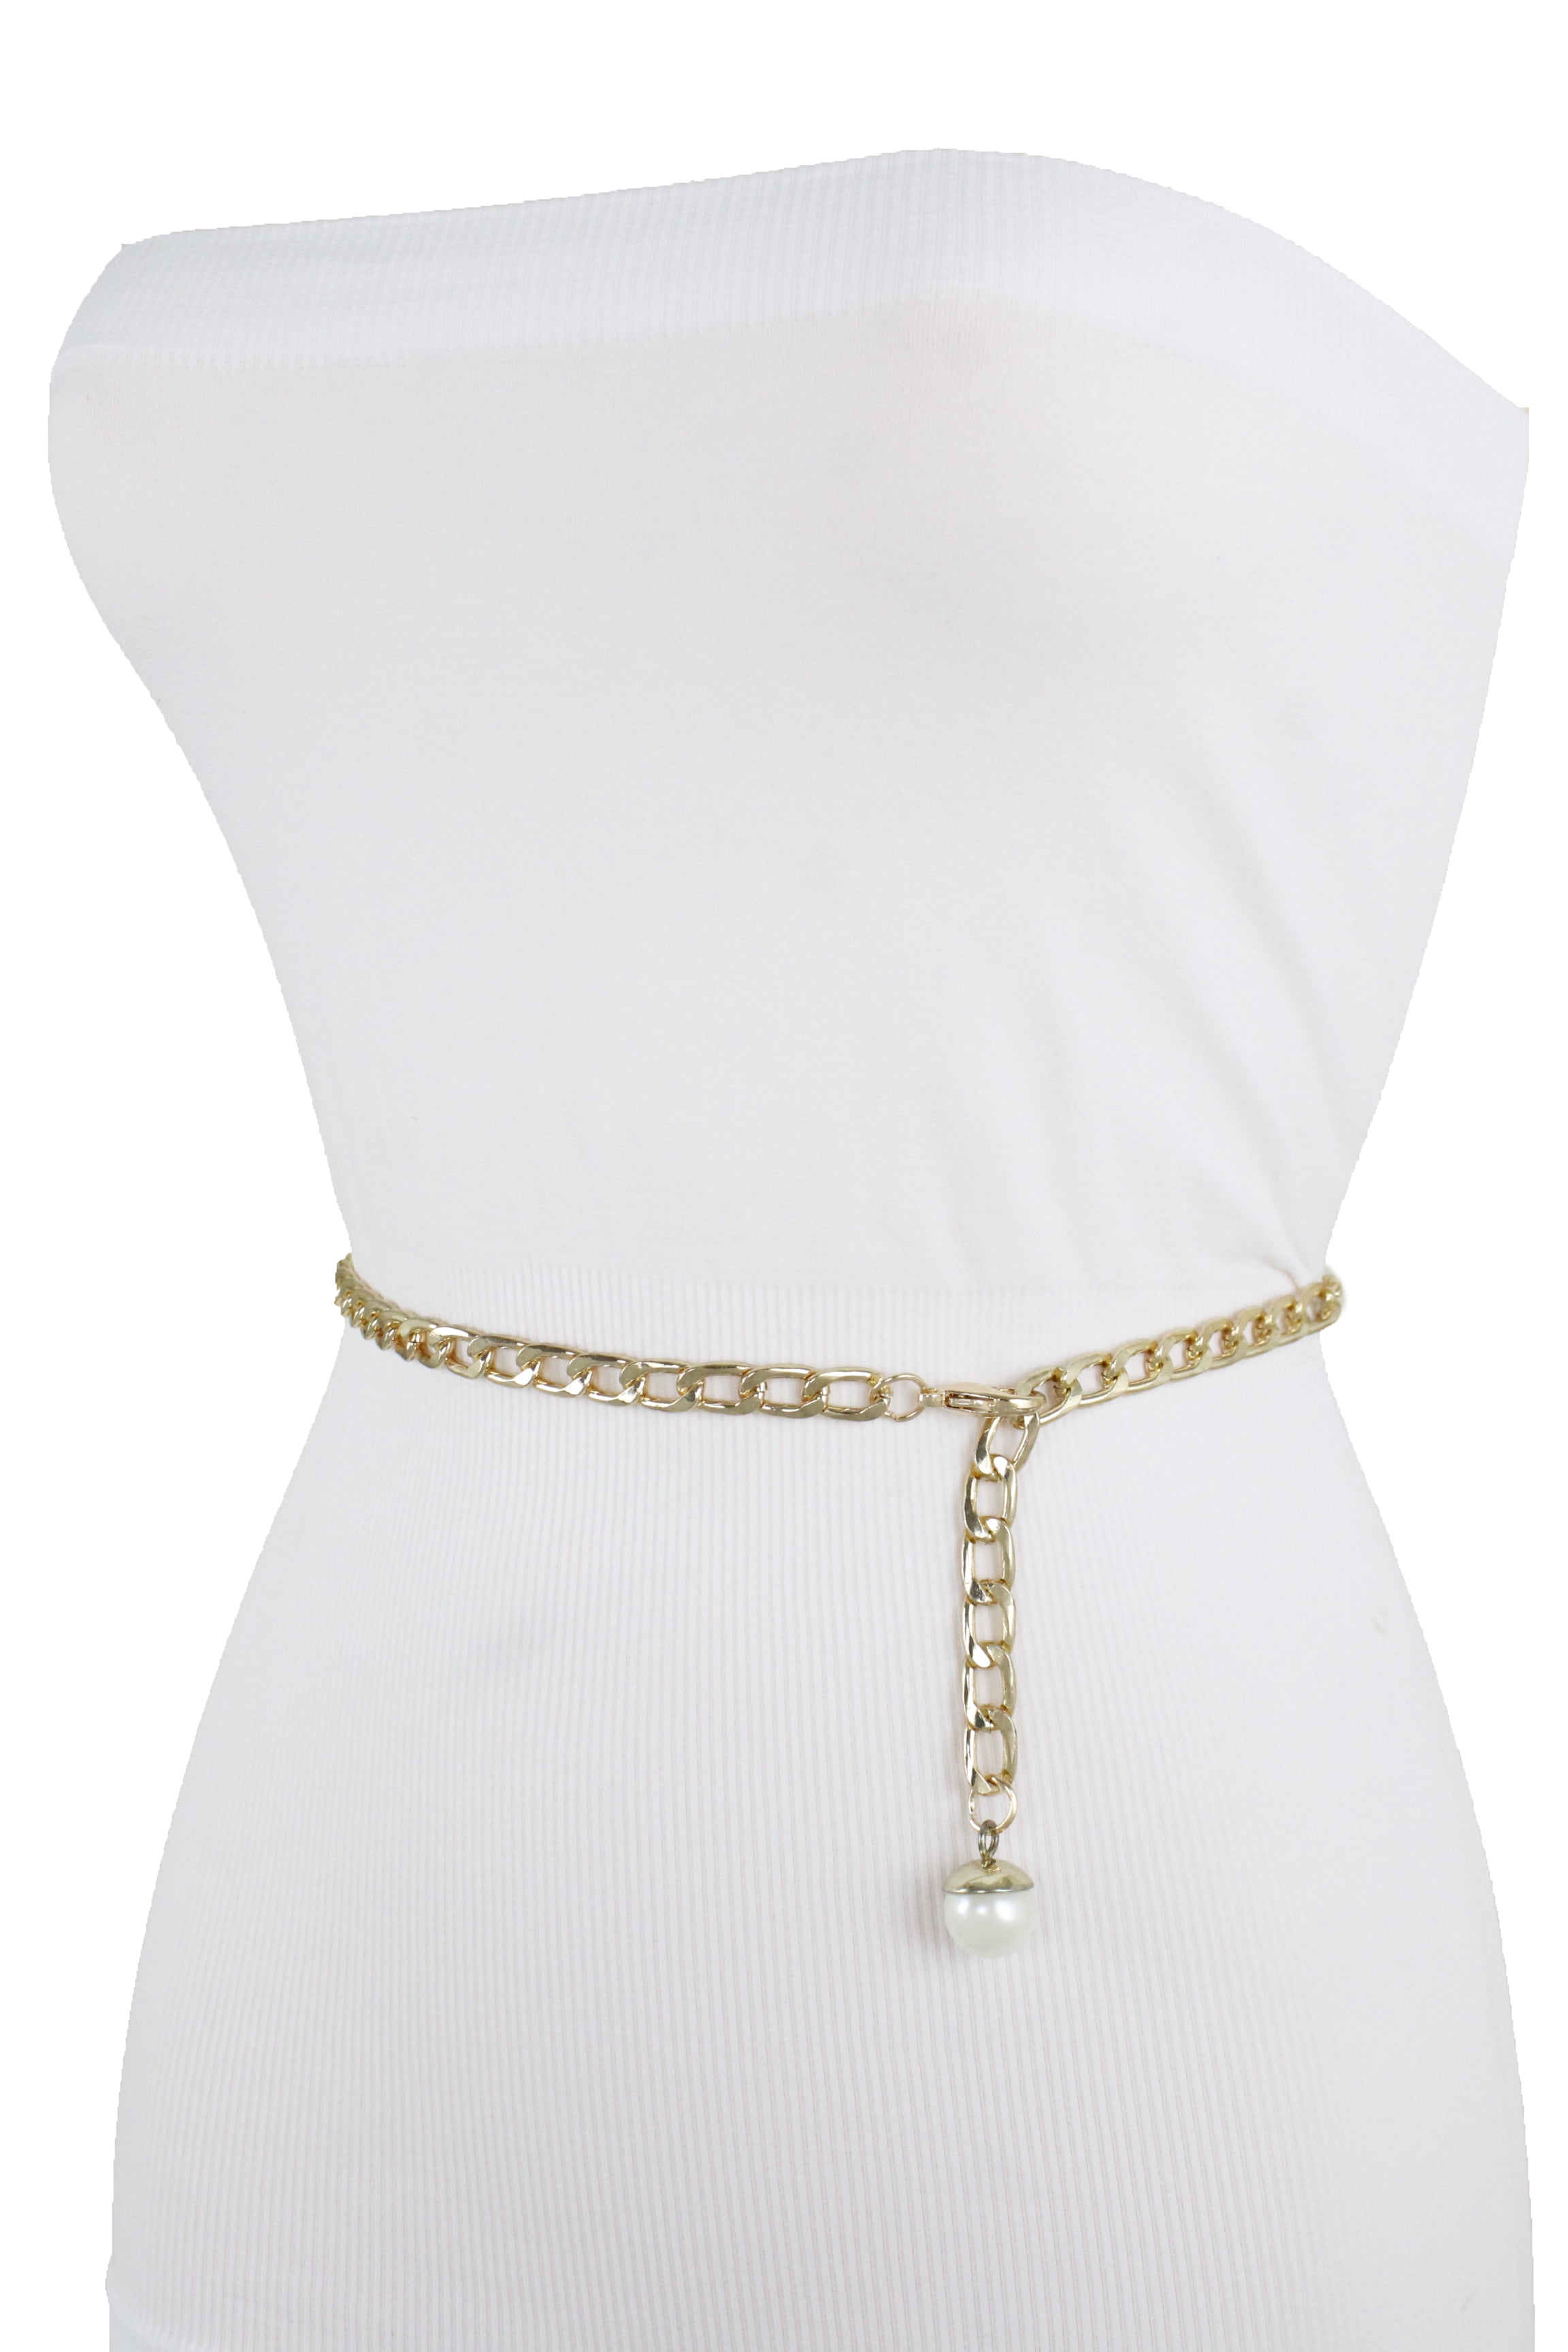 Women Skinny Waistband Fashion Belt Gold Metal Chain Pearl Bead Charm M ...